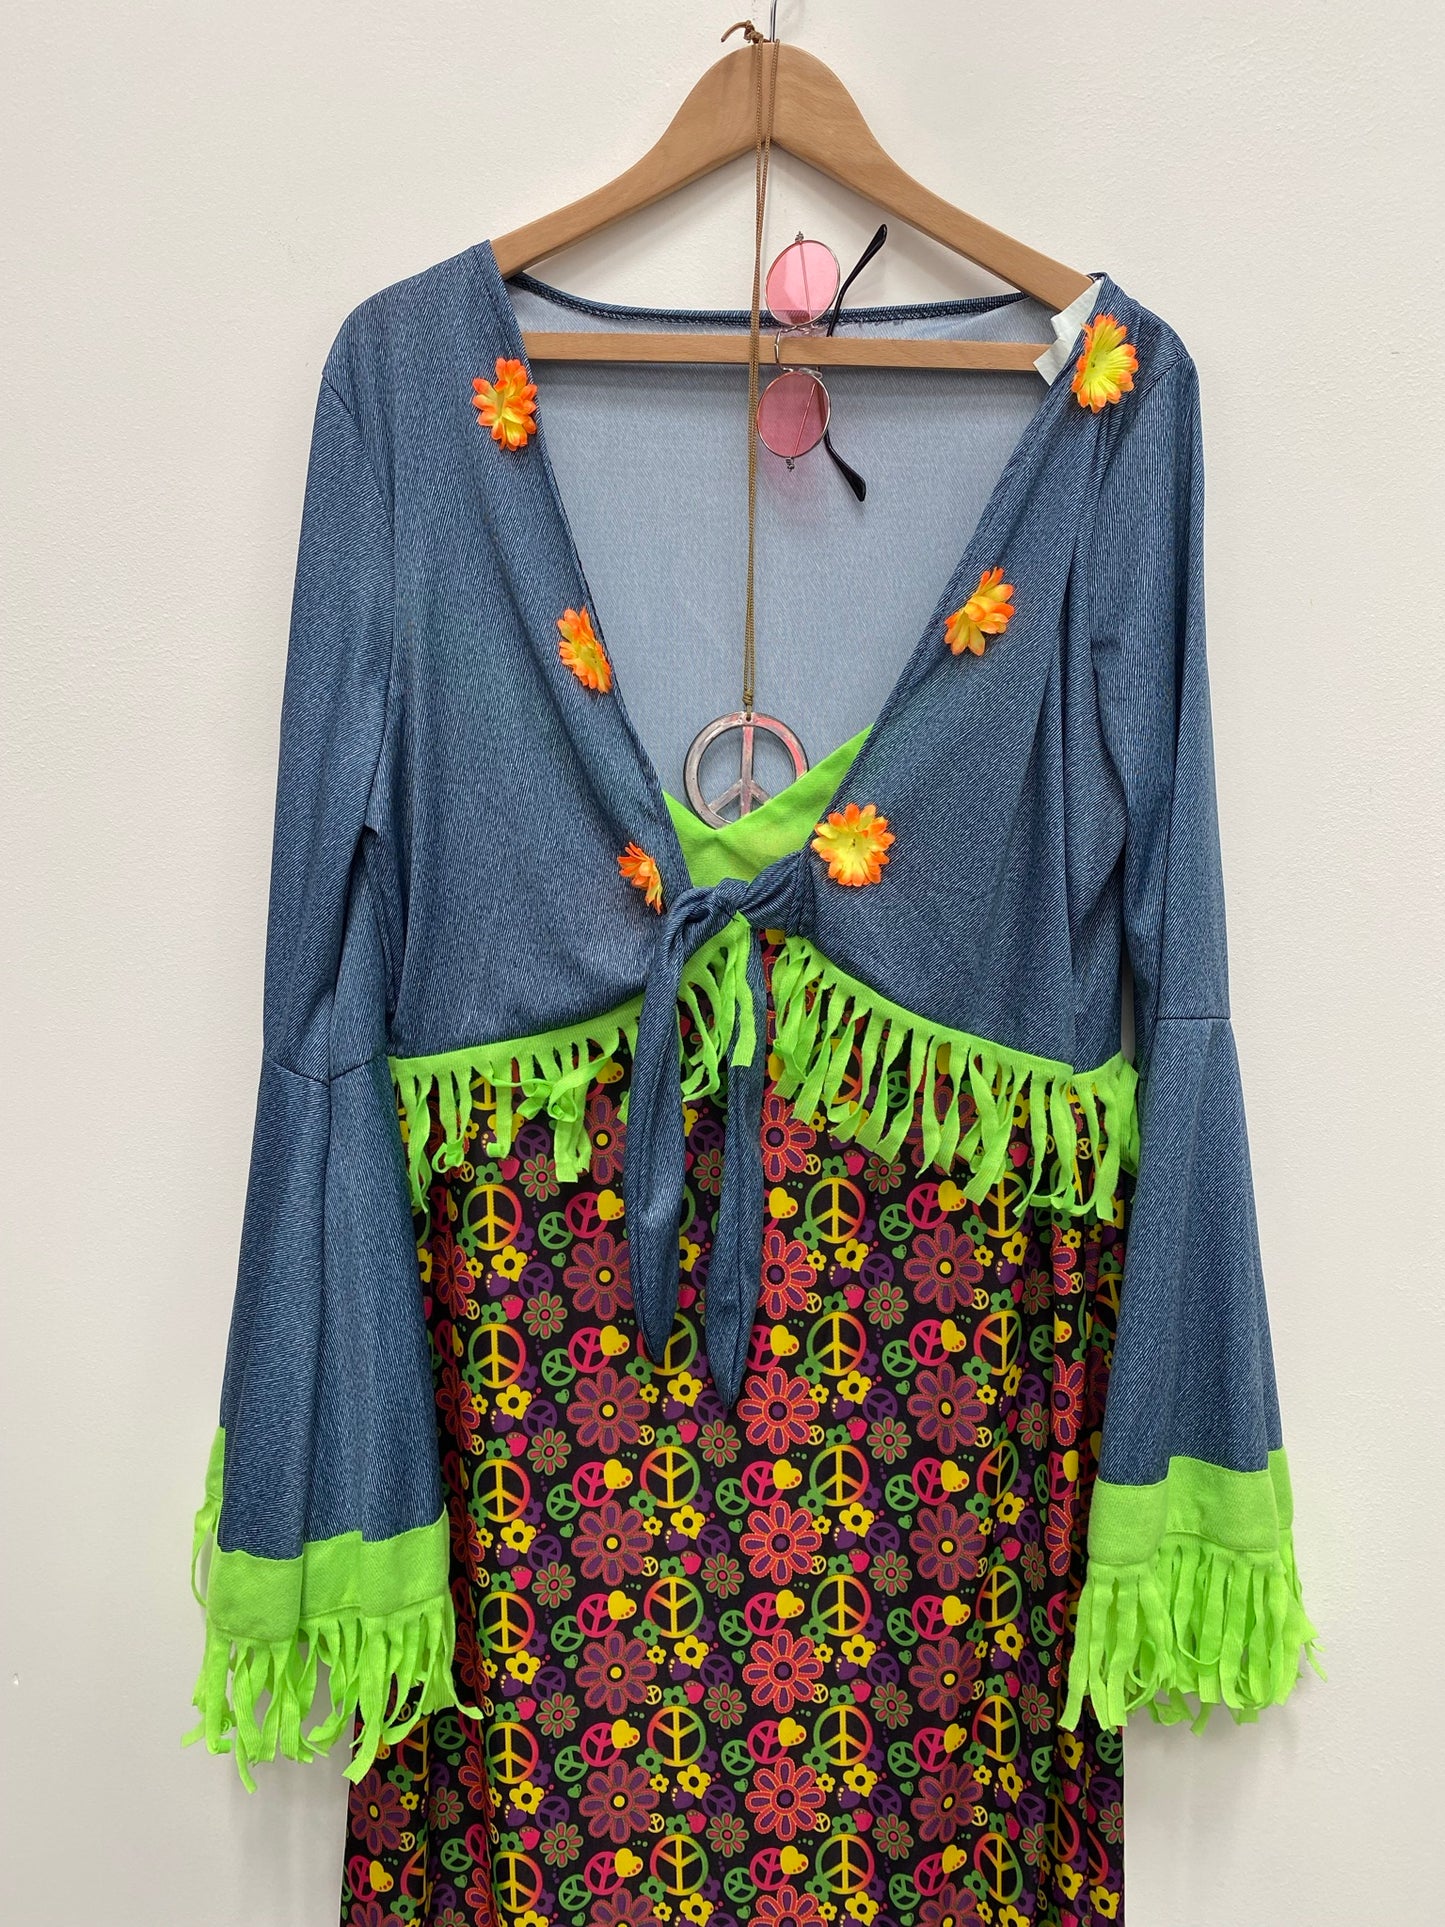 60s/70s Flower Power Hippie Dress Size 2XL - Ex Hire Fancy Dress Costume